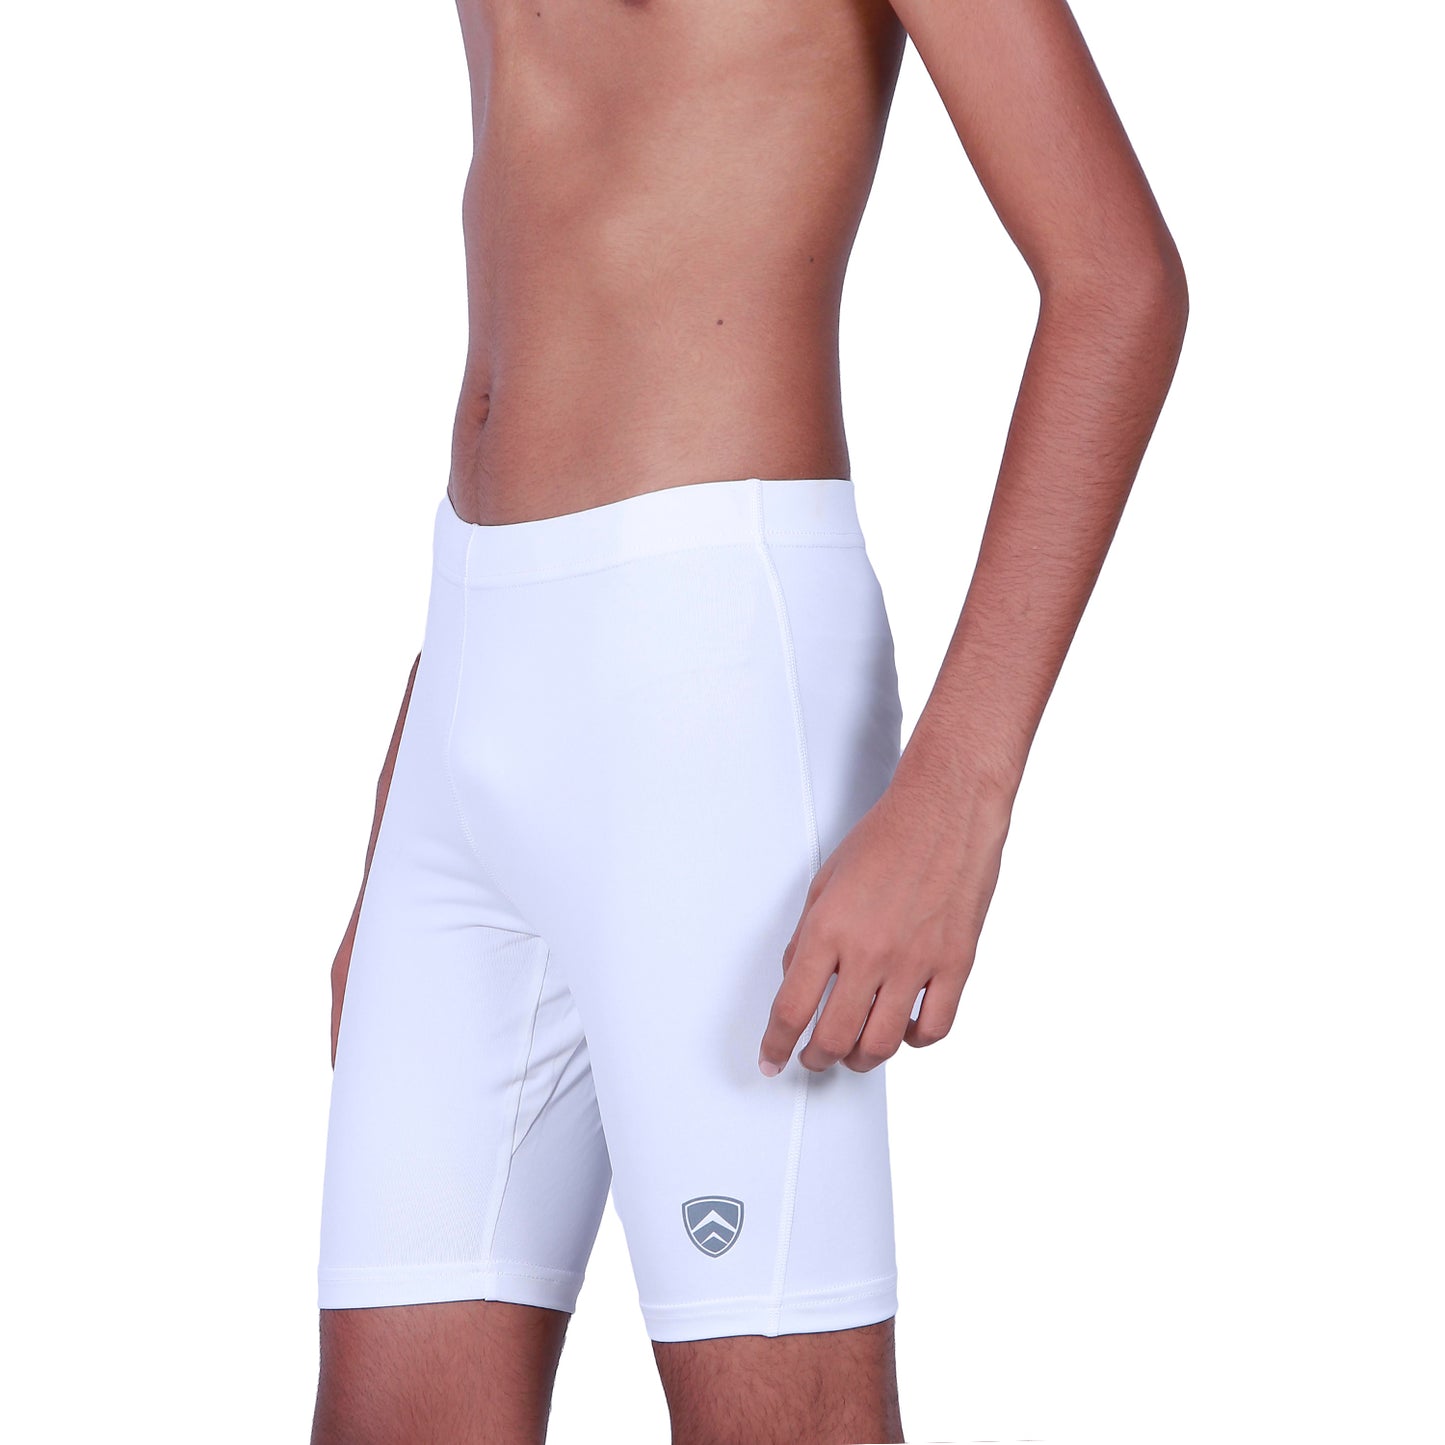 ARMR Junior Unisex WHITE SKYN Cycling Shorts